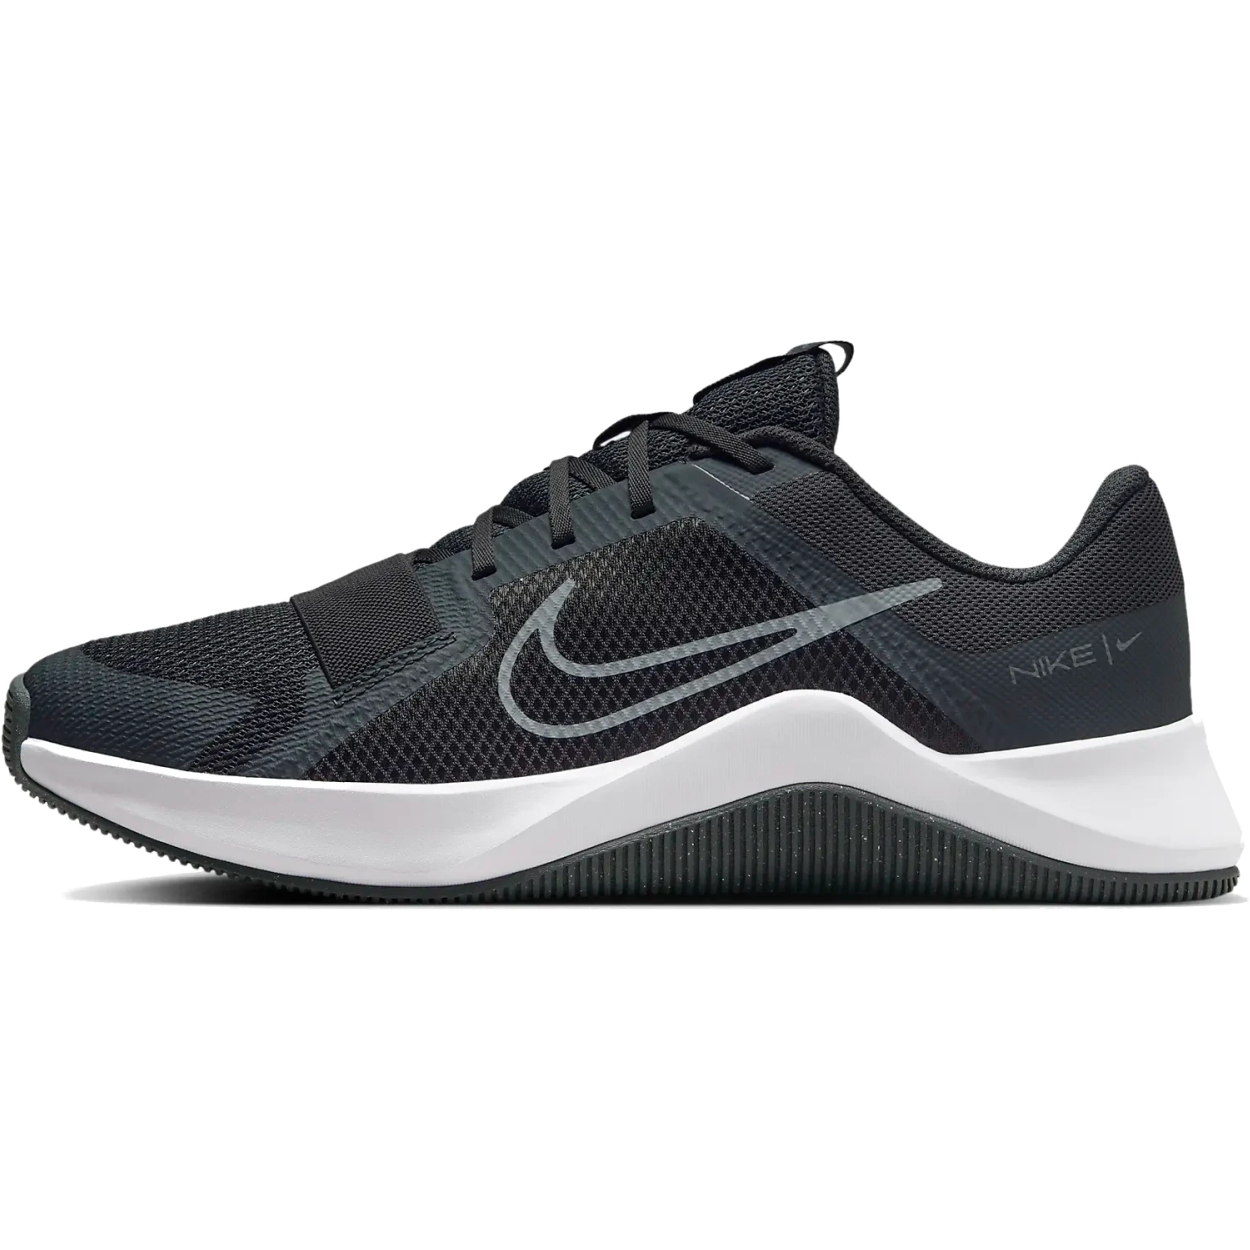 Productfoto van Nike MC Trainer 2 Schoenen Heren - dark smoke grey/white/monarch/smoke grey DM0823-011